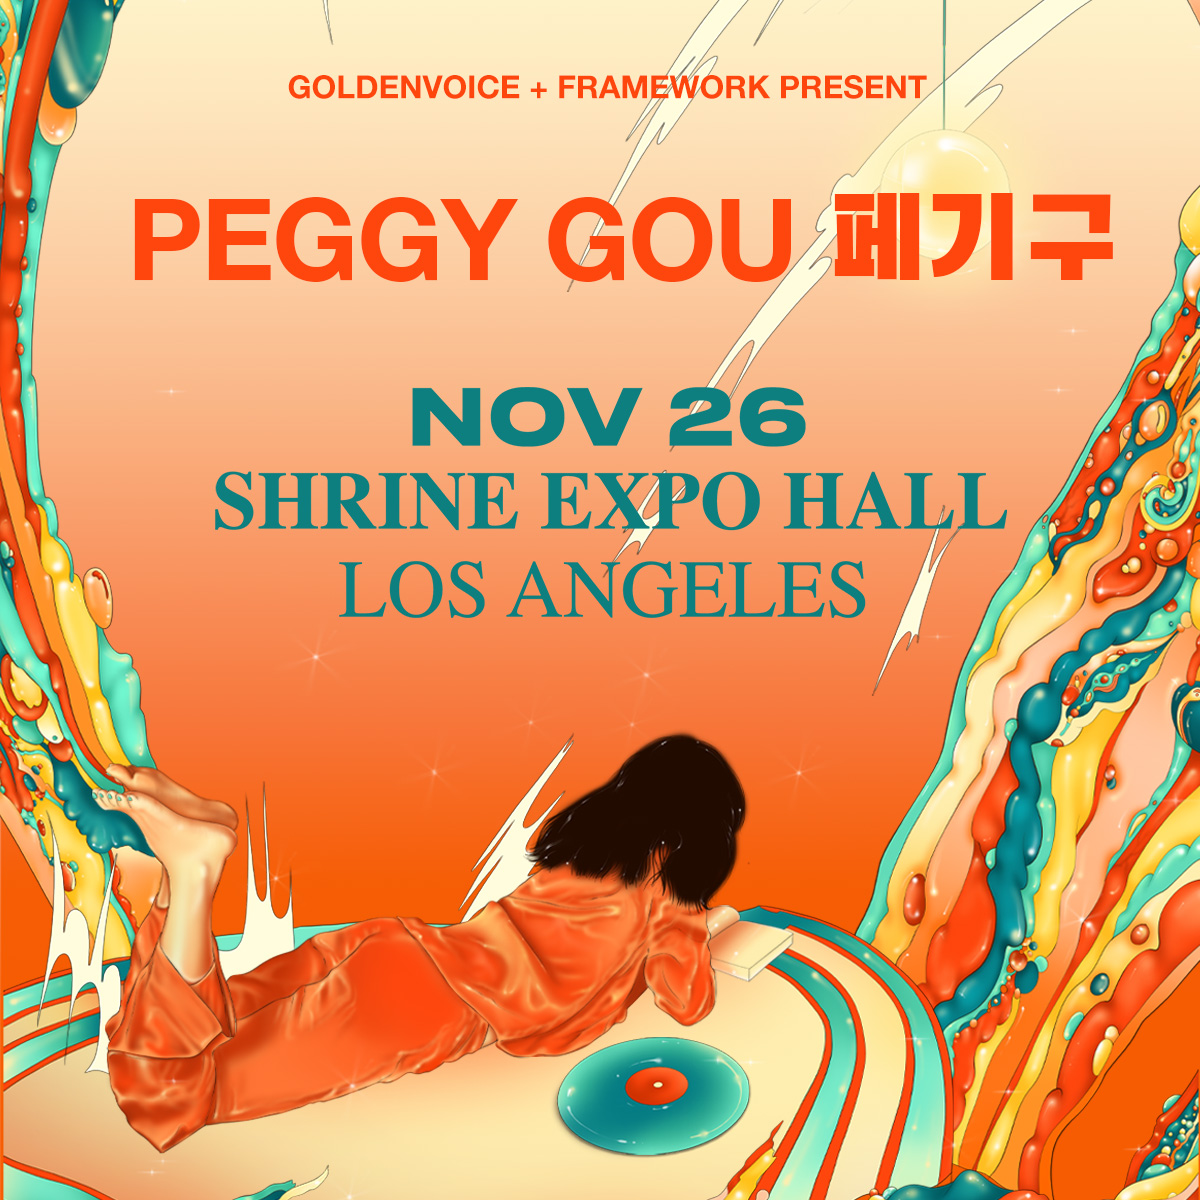 Peggy Gou Tickets, 2023 Concert Tour Dates